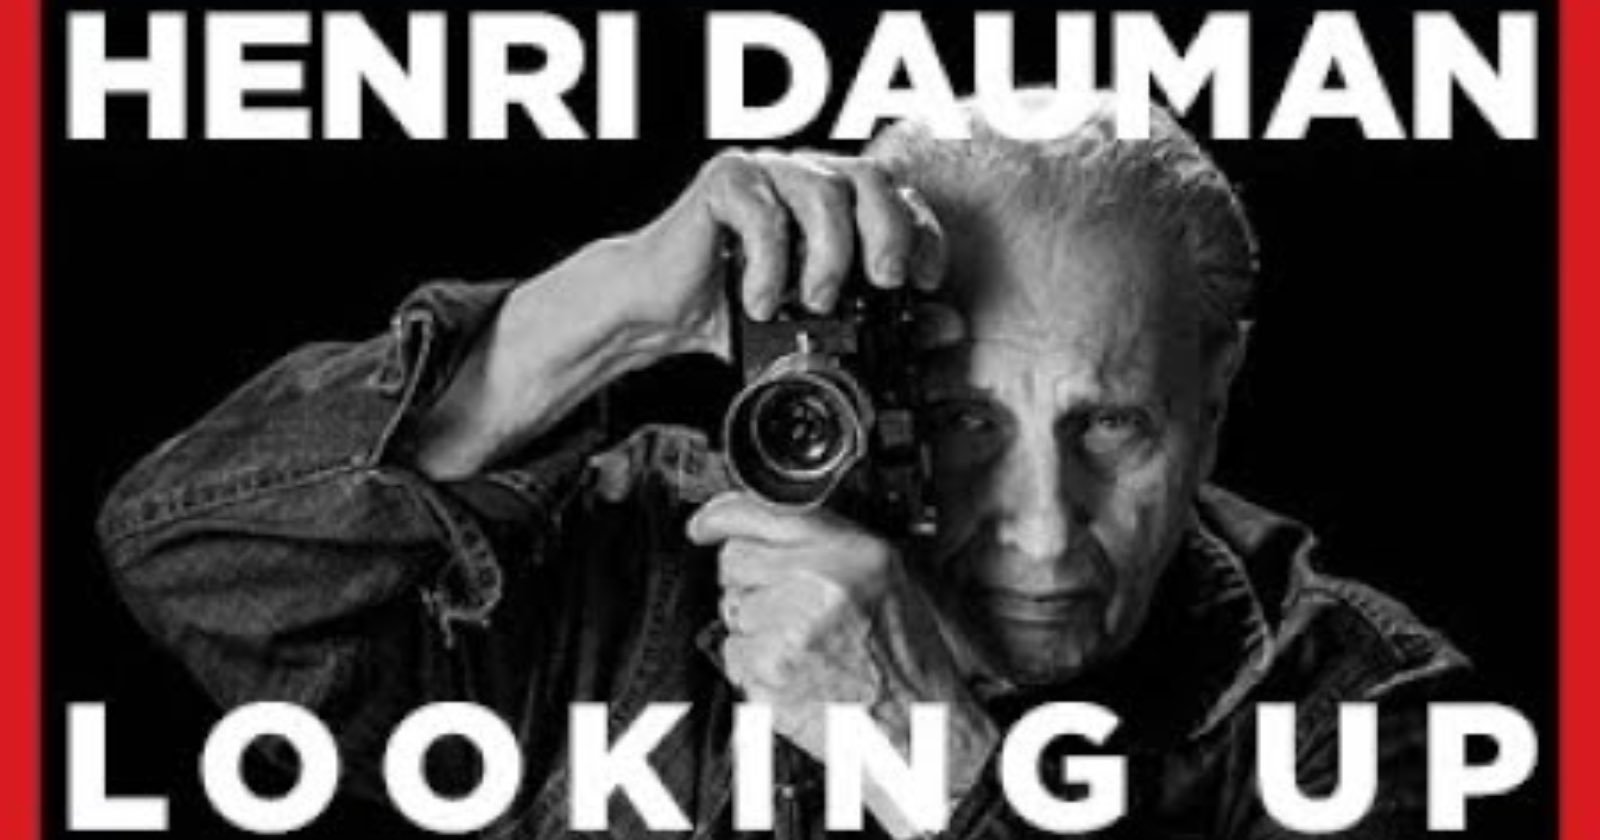 Henri Dauman photographer dies